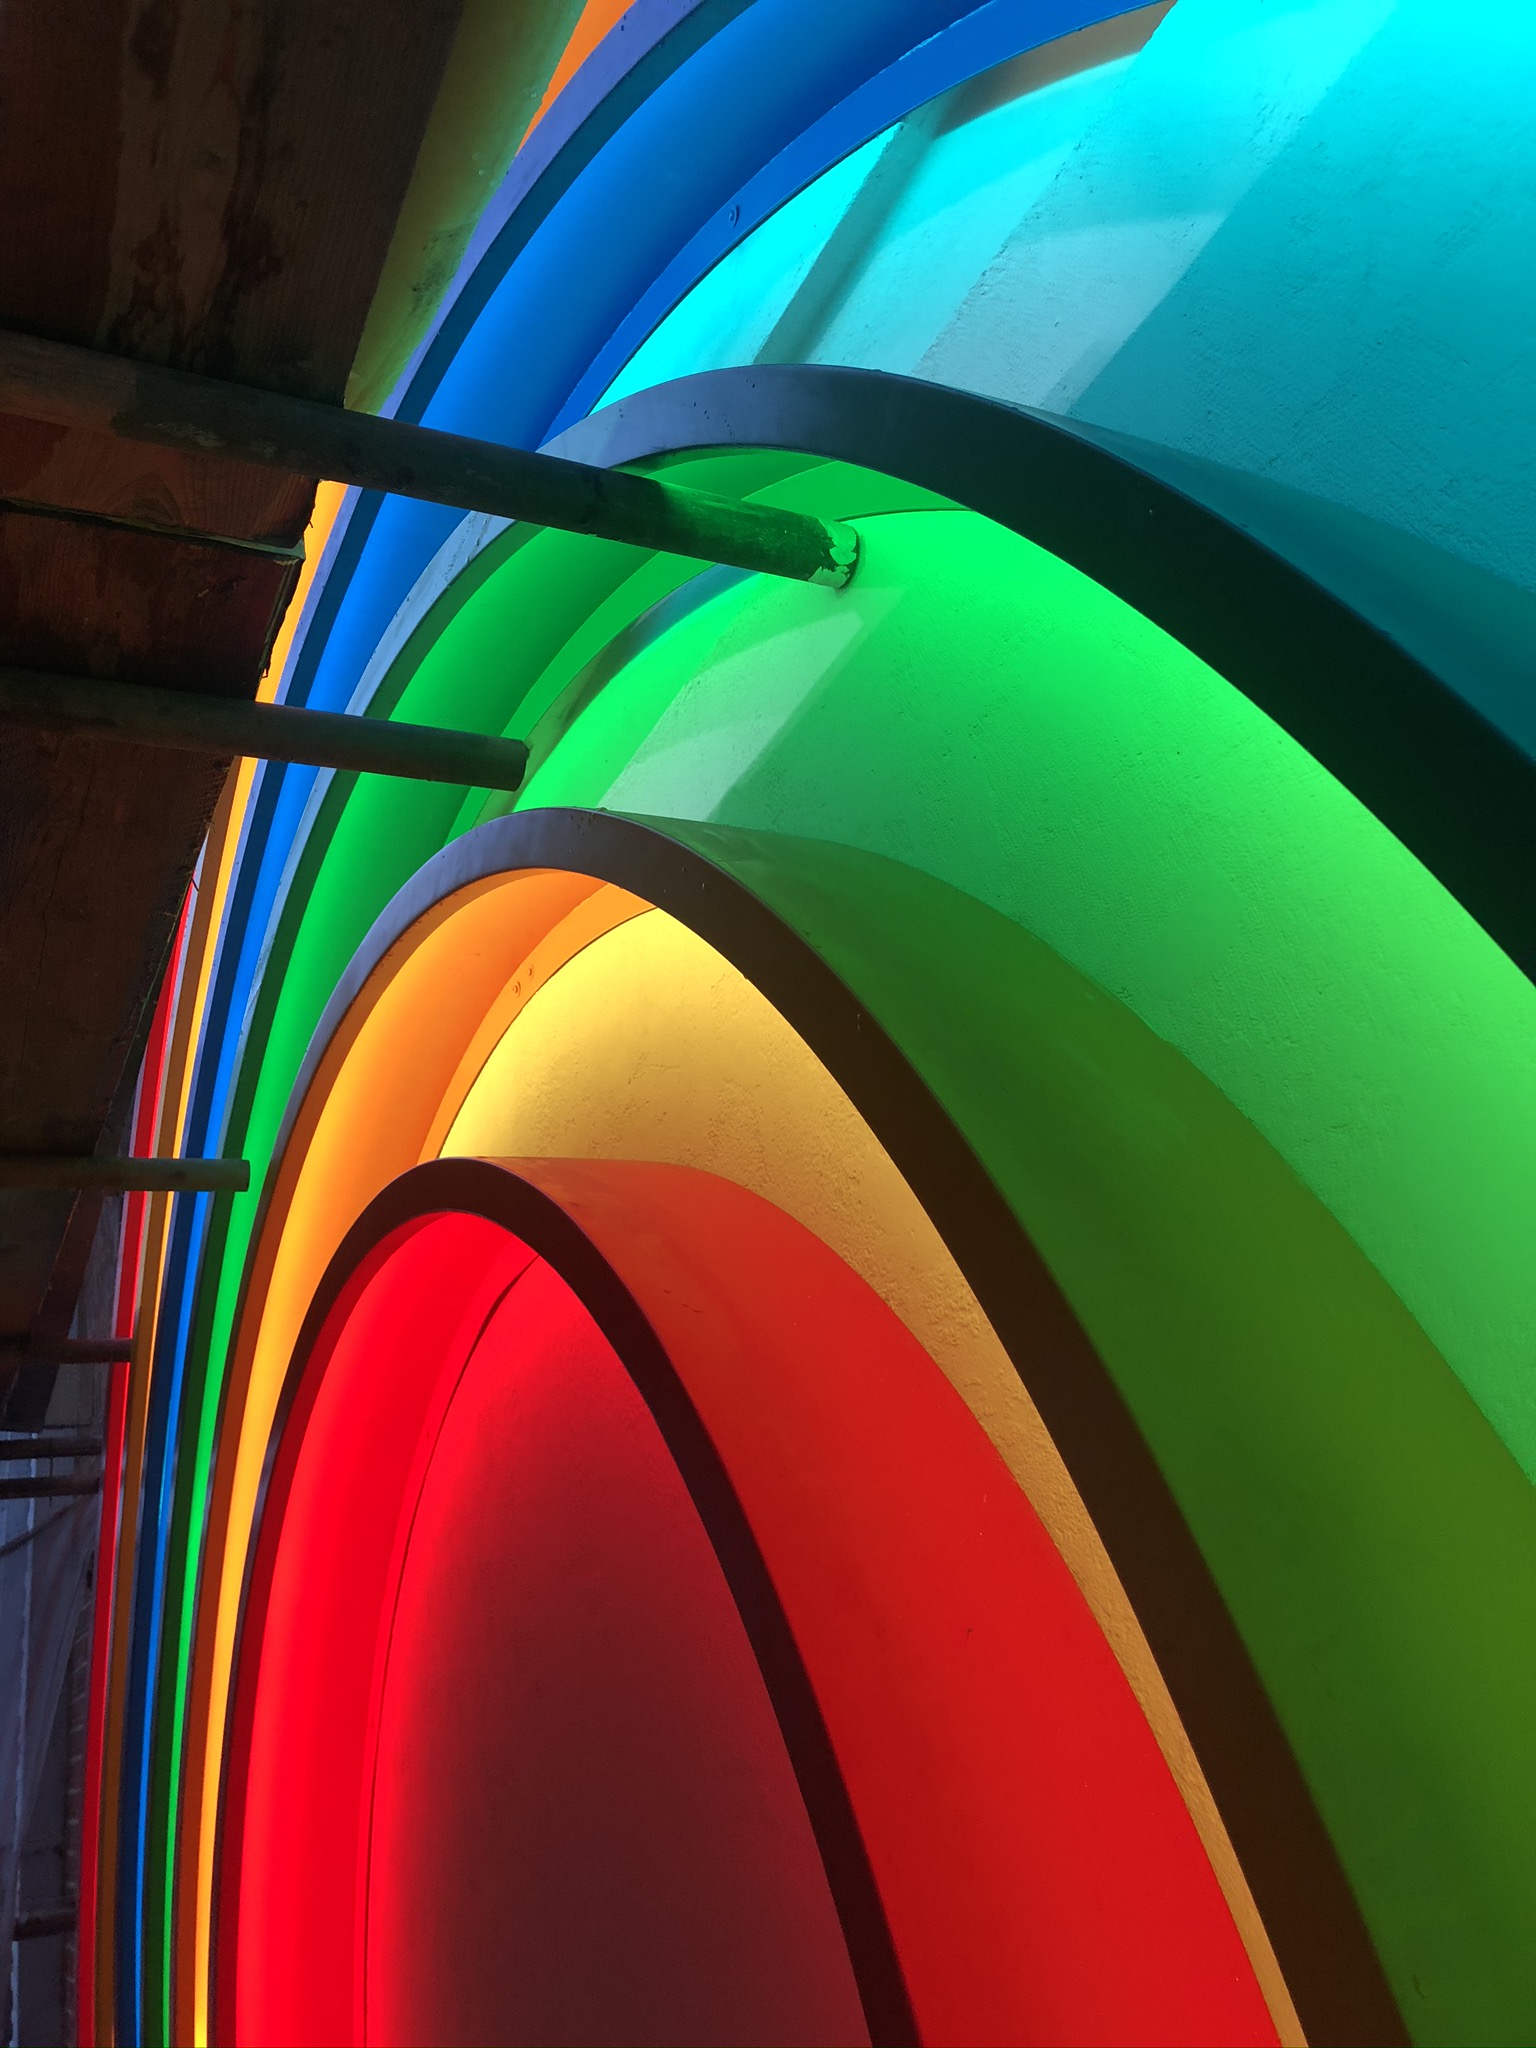 The refurbished rainbow at Reliance Arcade